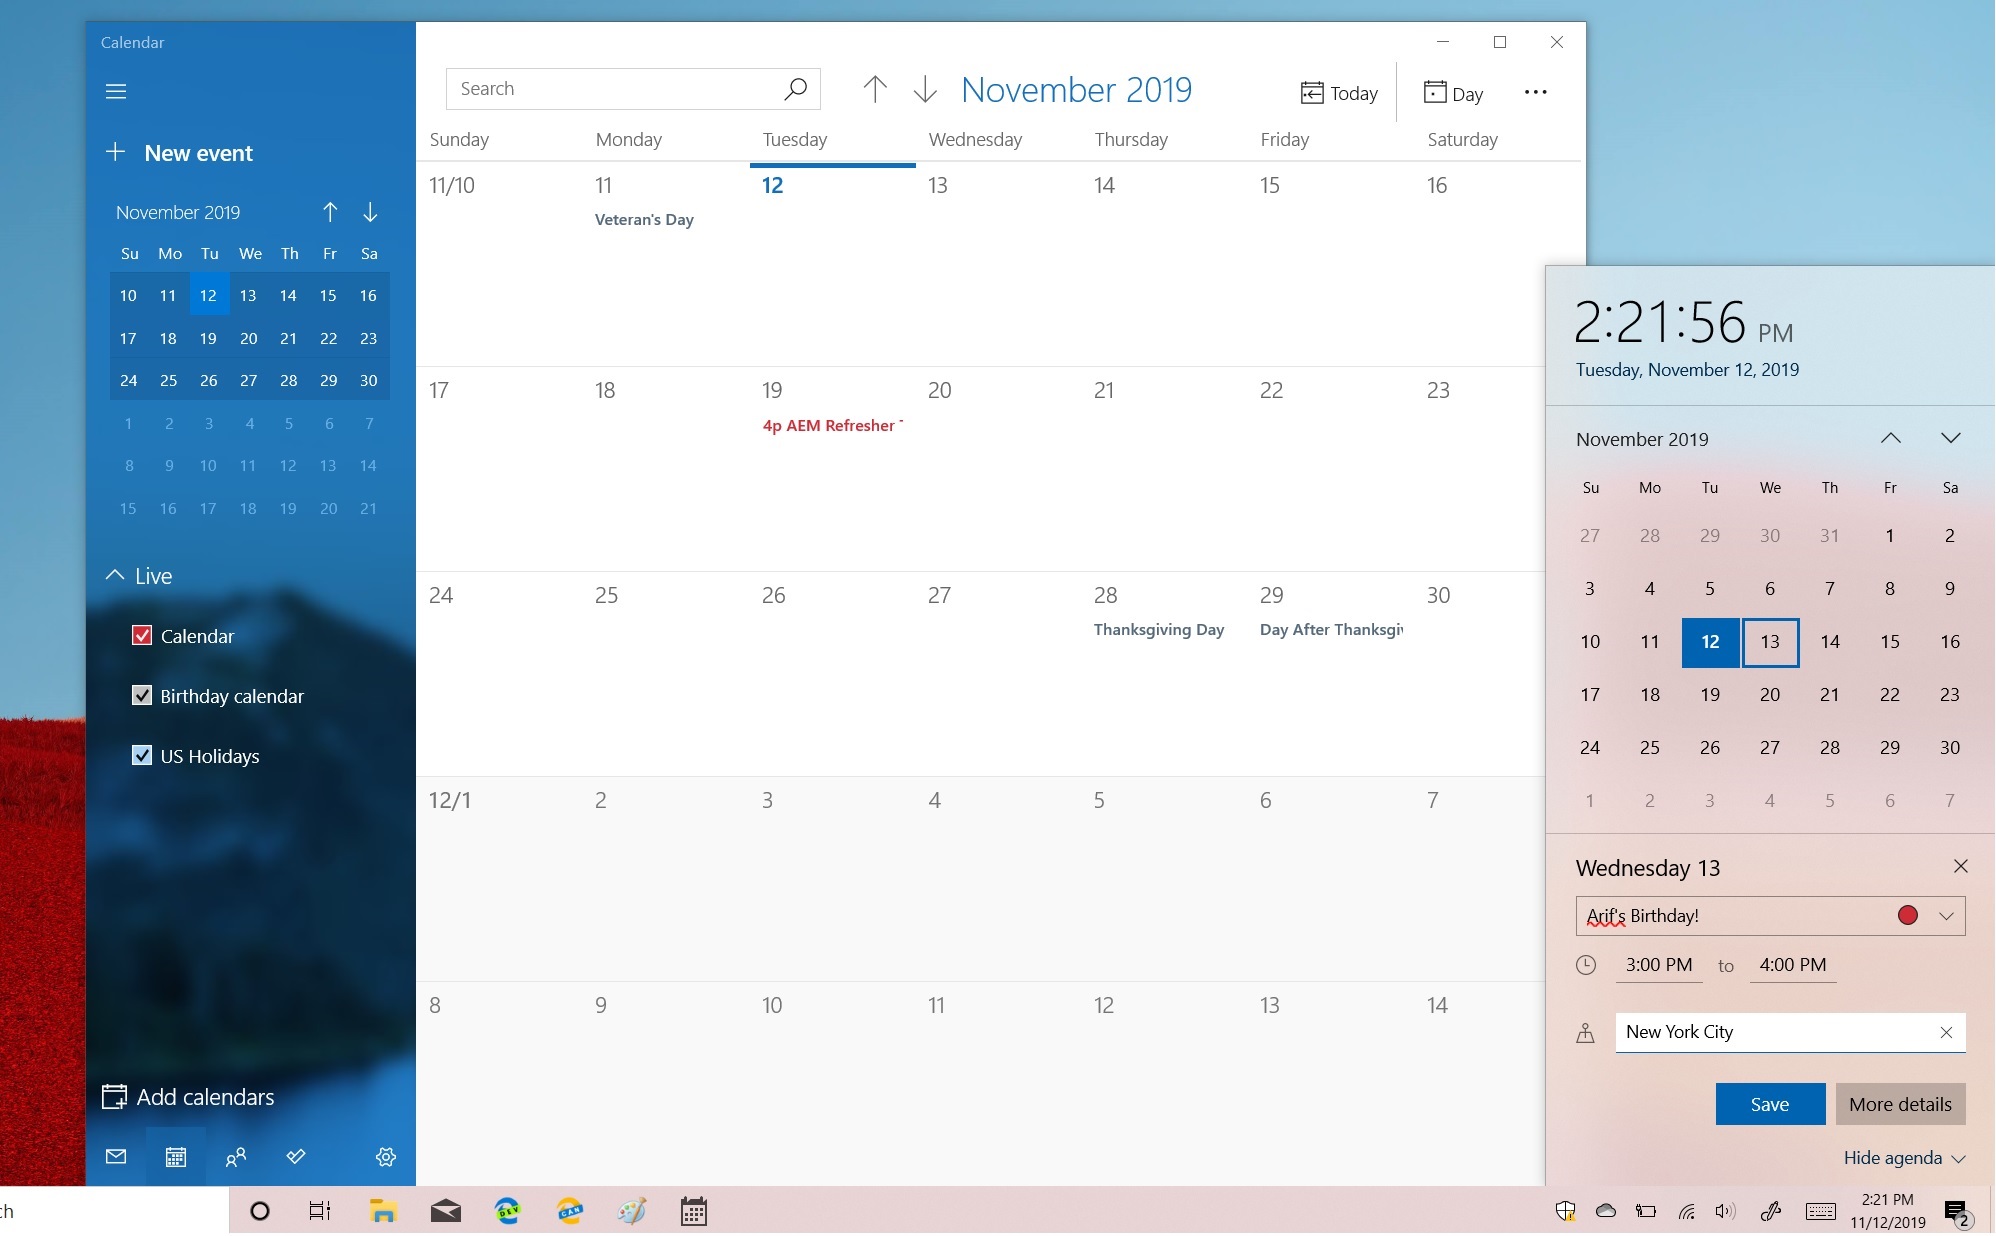 windows 10 19h2 update taslkbar november 2019